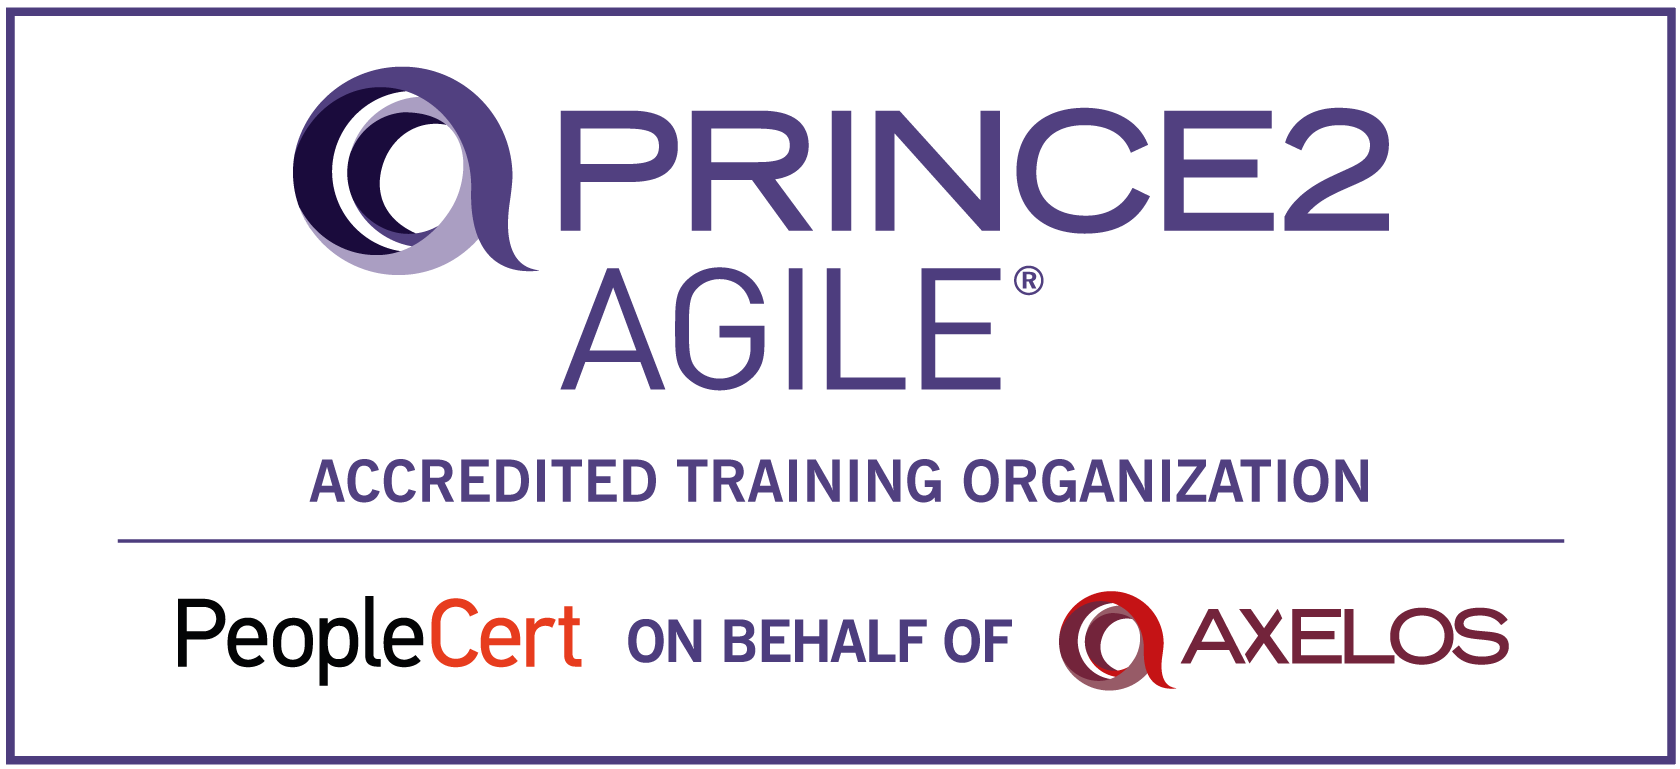 PRINCE2 Agile ATO